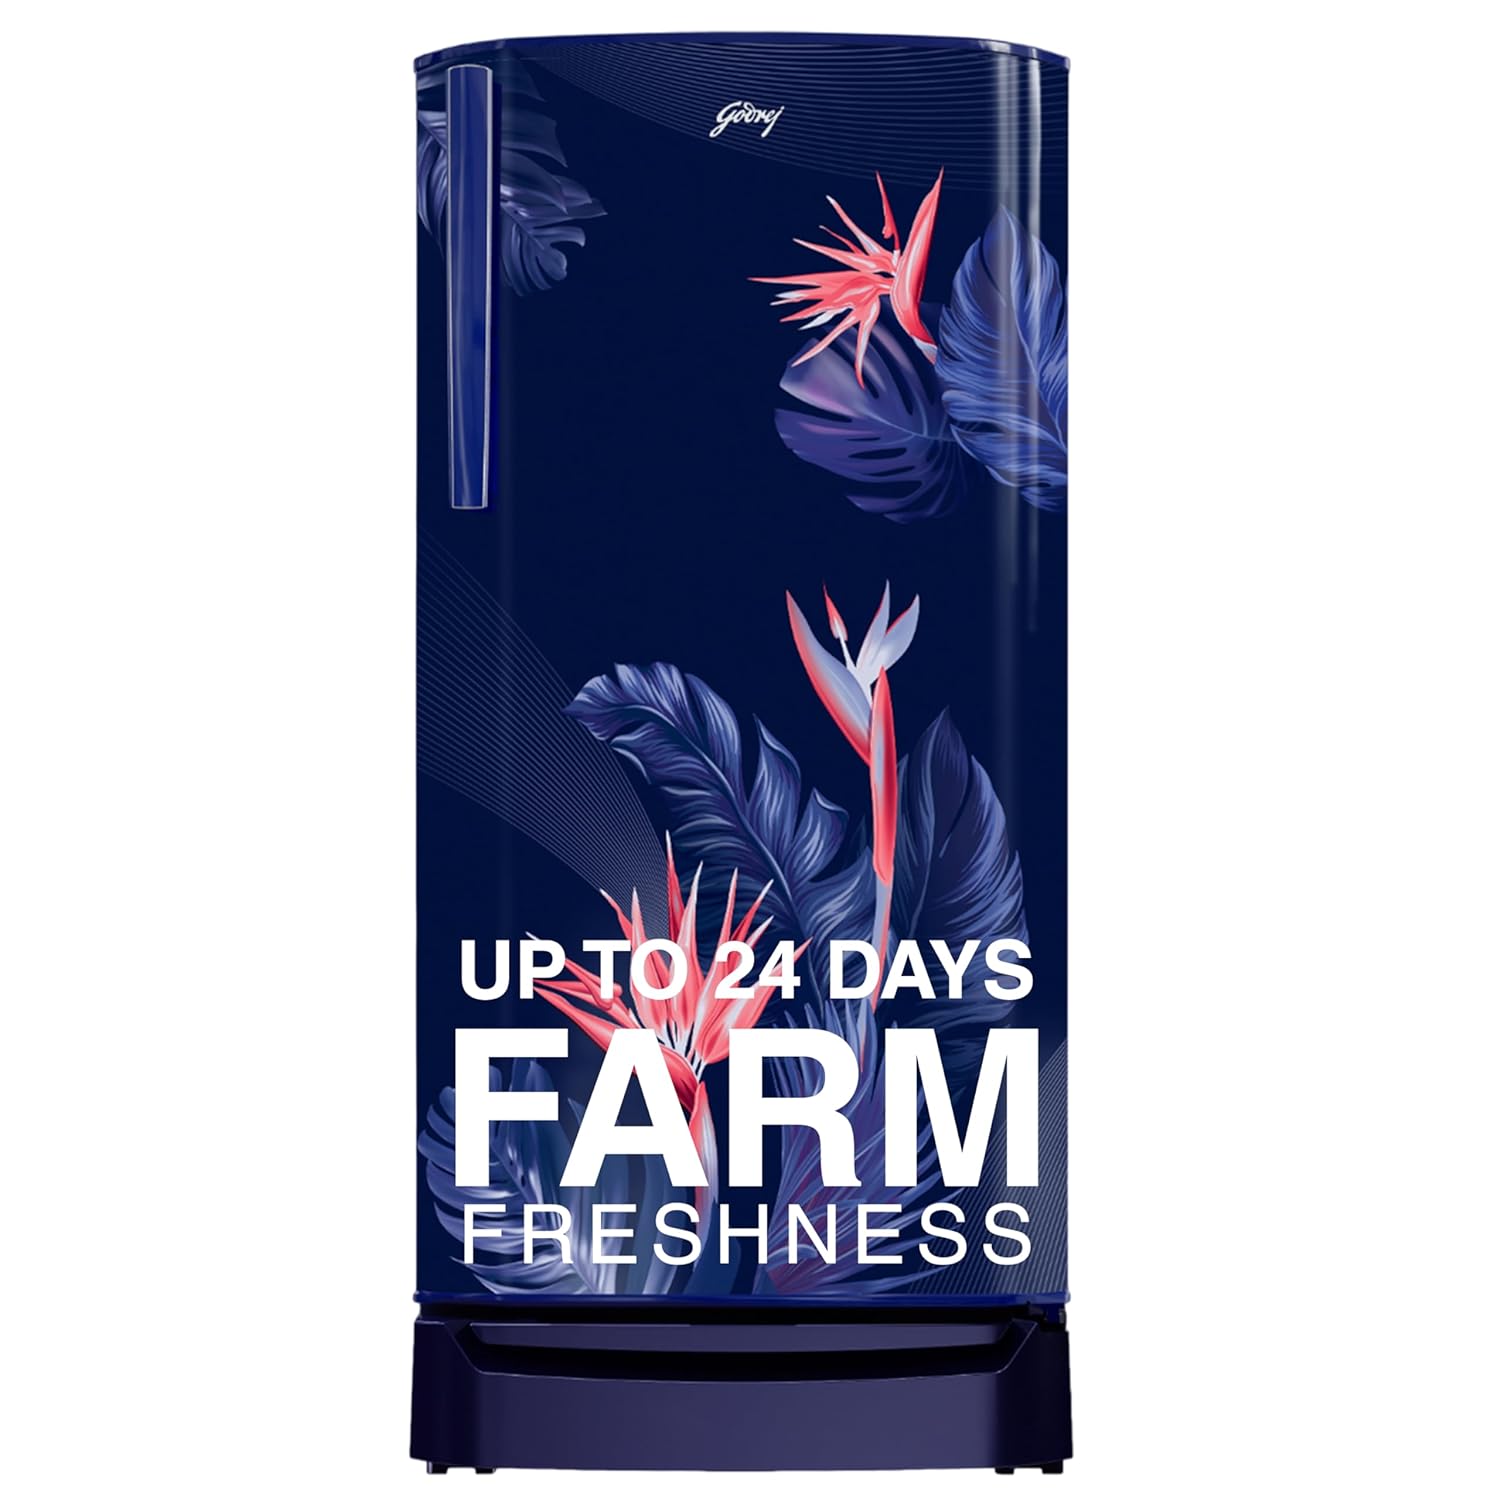 Godrej 183 L 3 Star Farm Fresh Crisper Technology With Jumbo Vegetable Tray Direct Cool Single Door Refrigerator